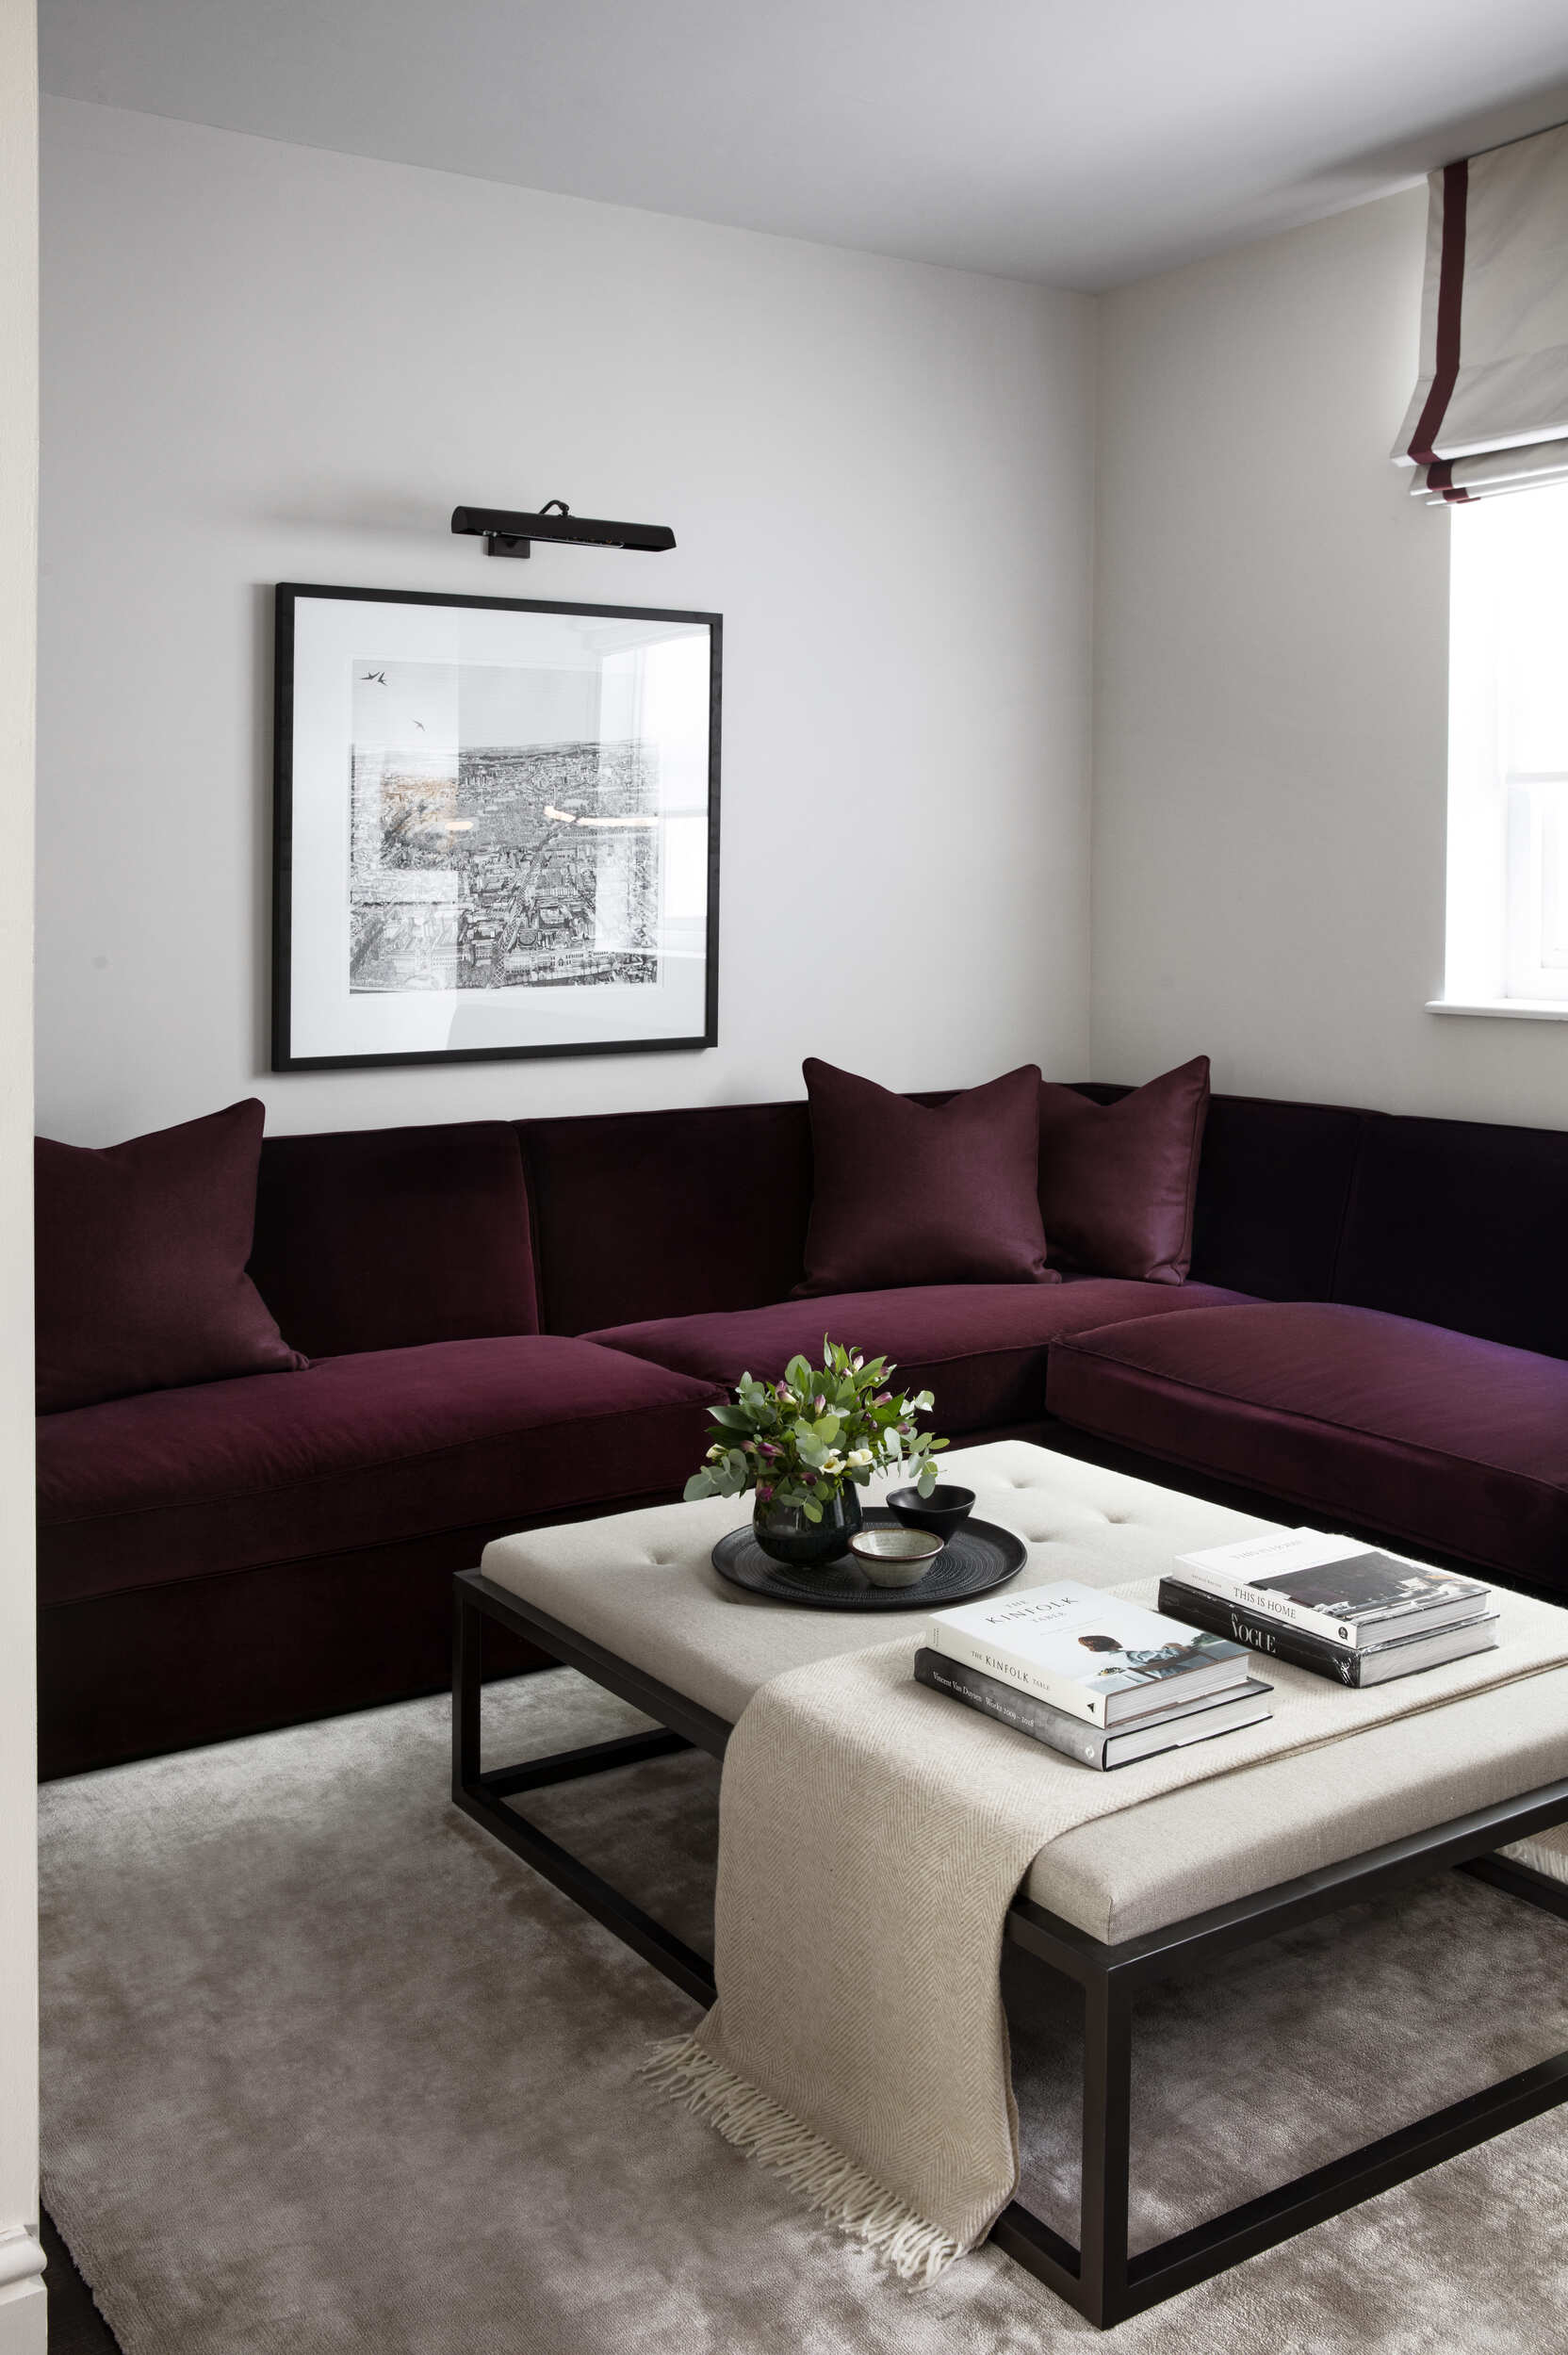 Comfortable room with wall sofa and coffee table